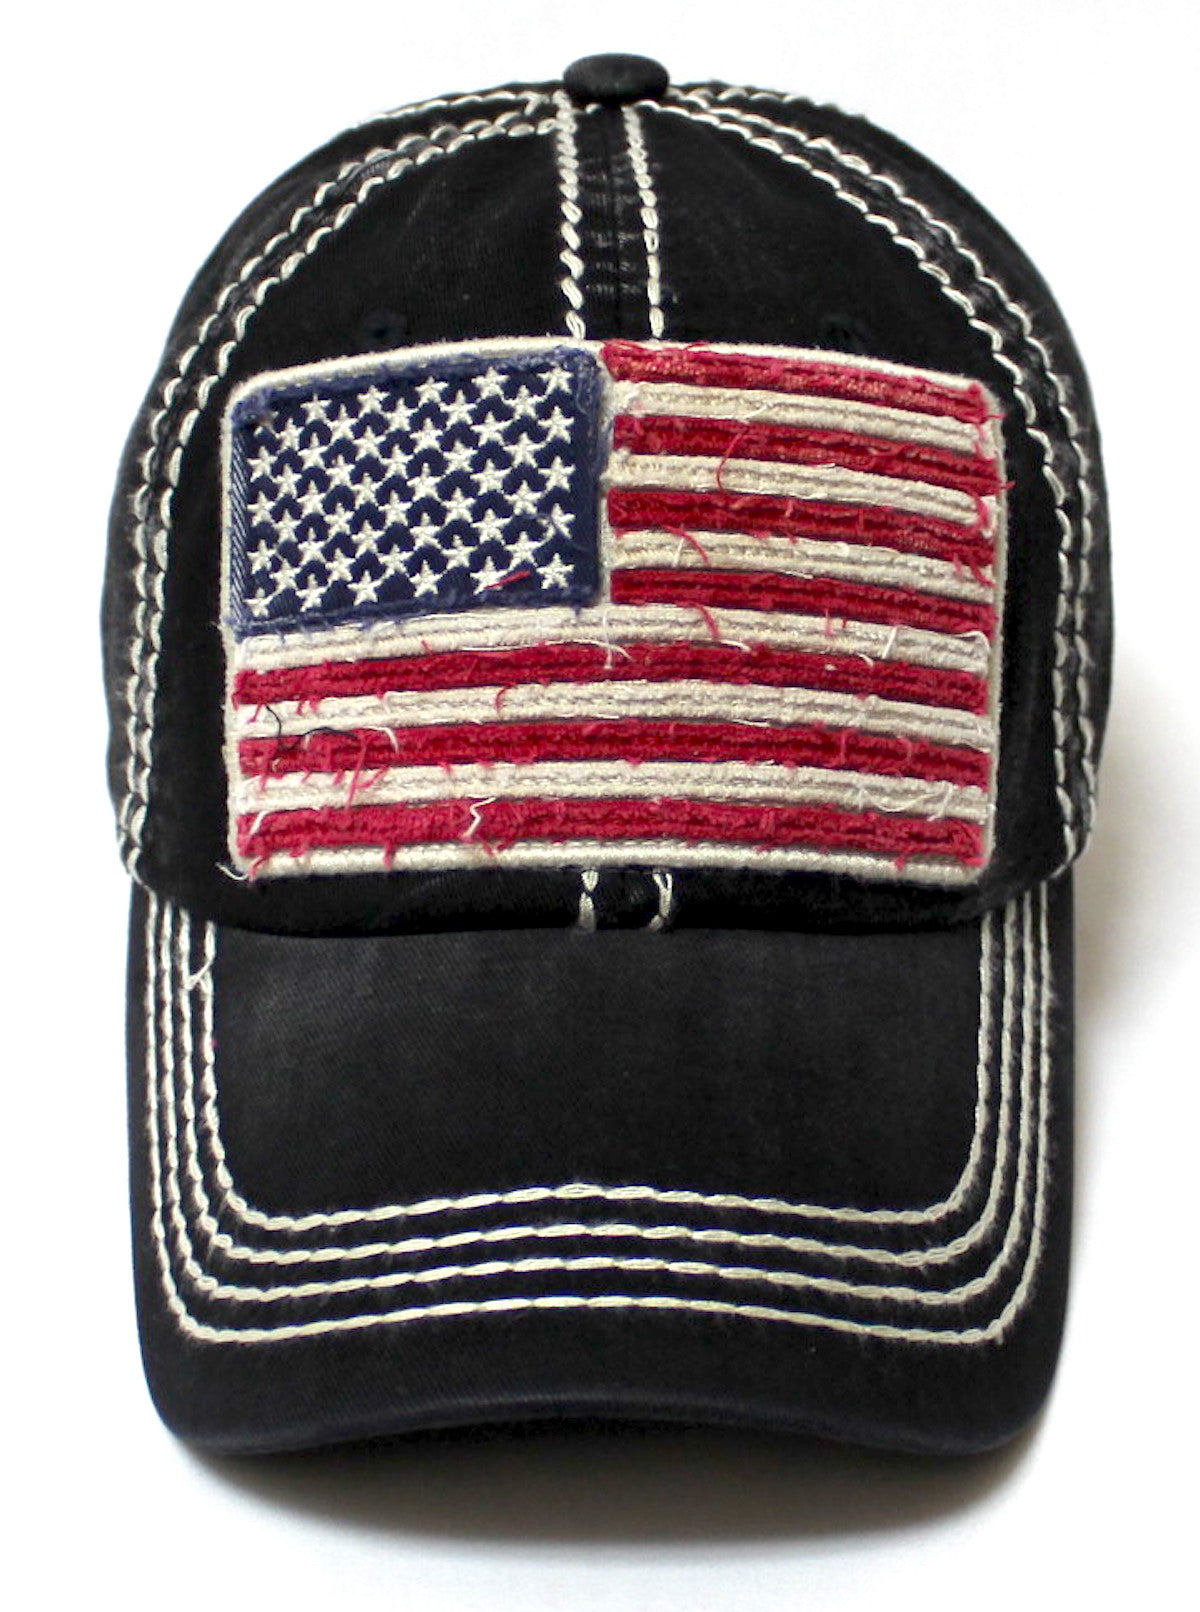 Oversized Vintage AMERICAN FLAG Patch Embroidery Baseball Cap, Black - Caps 'N Vintage 